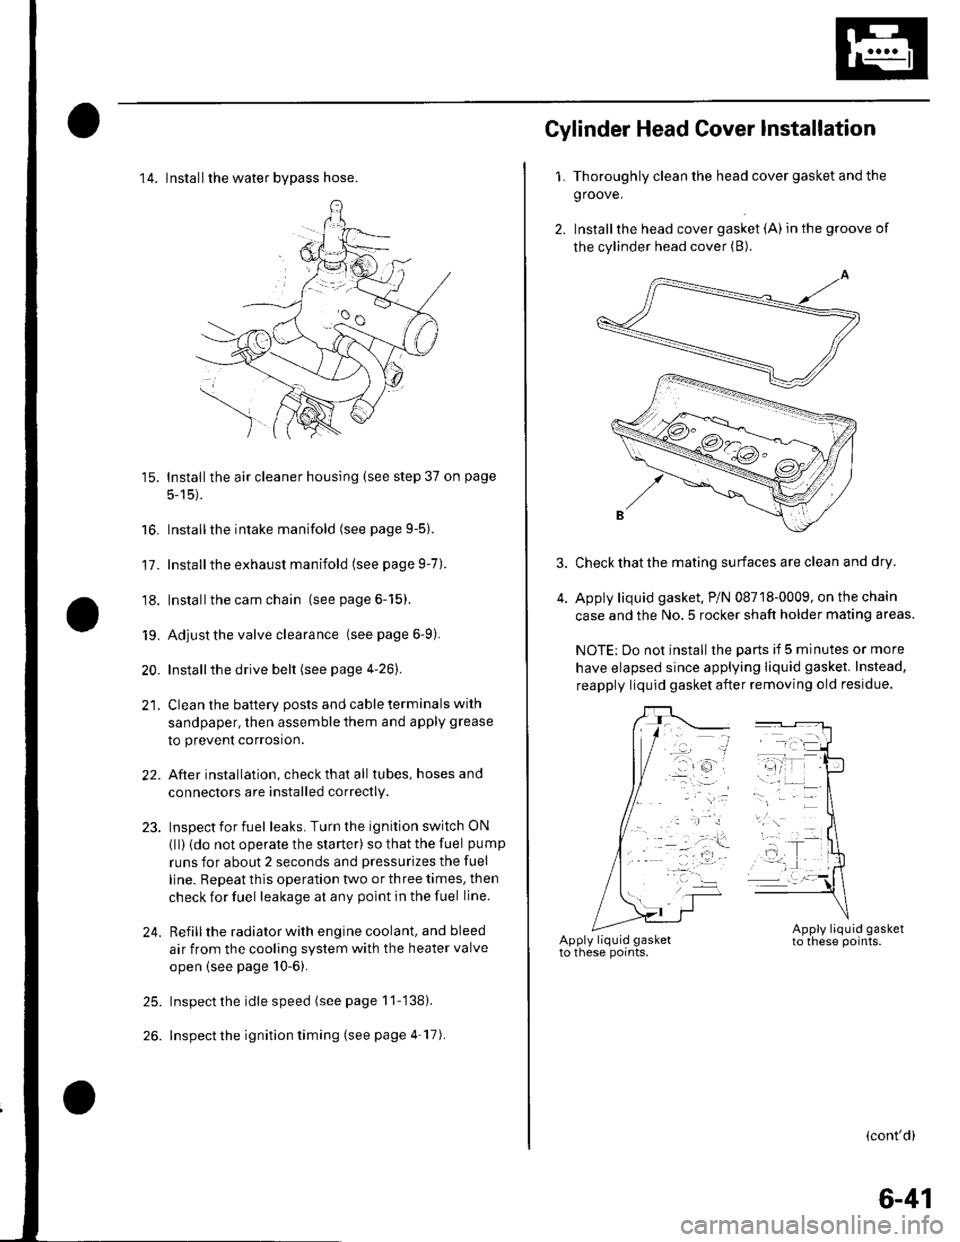 HONDA CIVIC 2003 7.G User Guide 14. Installthe water bvpass hose.
15. Installthe air cleaner housing (see step 37 on page
5-15).
16. Installthe intake manifold (see page 9-5).
17. Installthe exhaust manifold (see page 9-7).
18. Ins